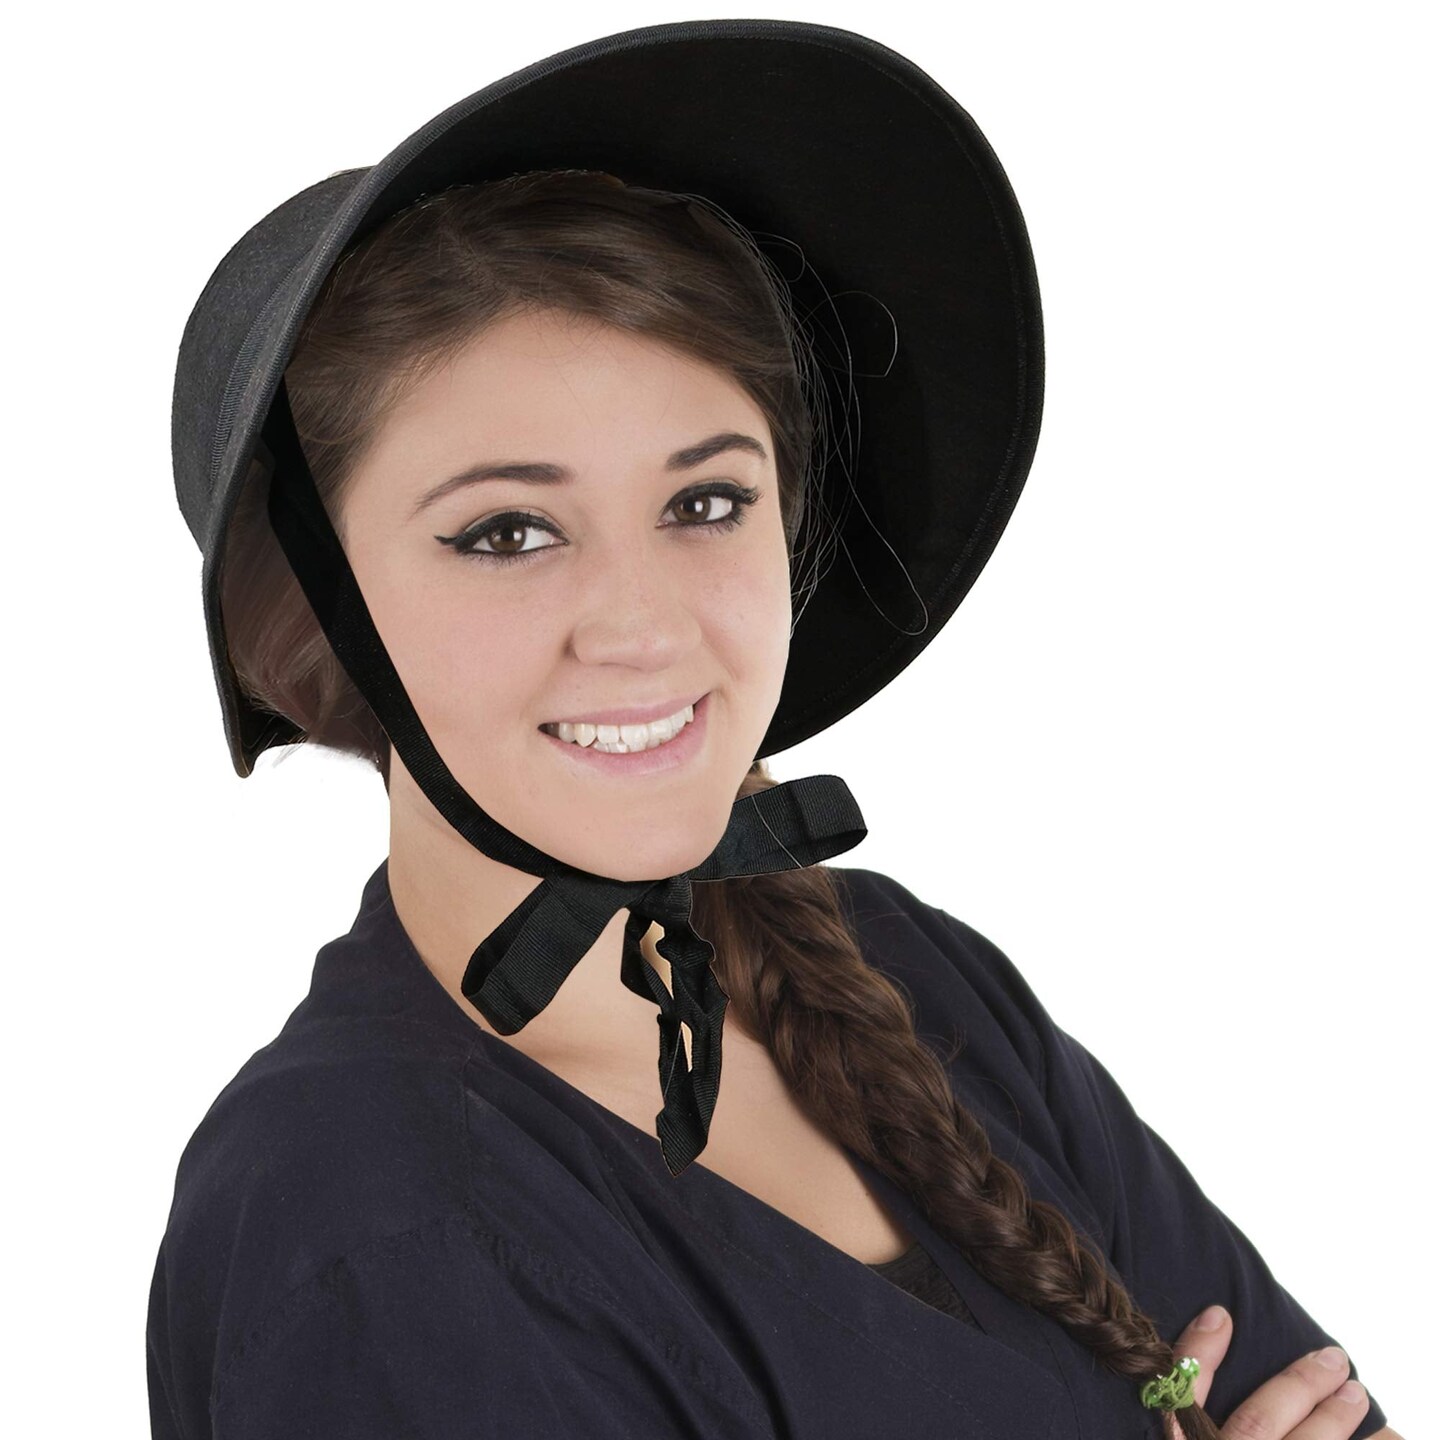 Vintage Old Fashioned Bonnet - Black Colonial Pioneer Prairie Felt Sun Hat Costume Bonnets for Women and Children